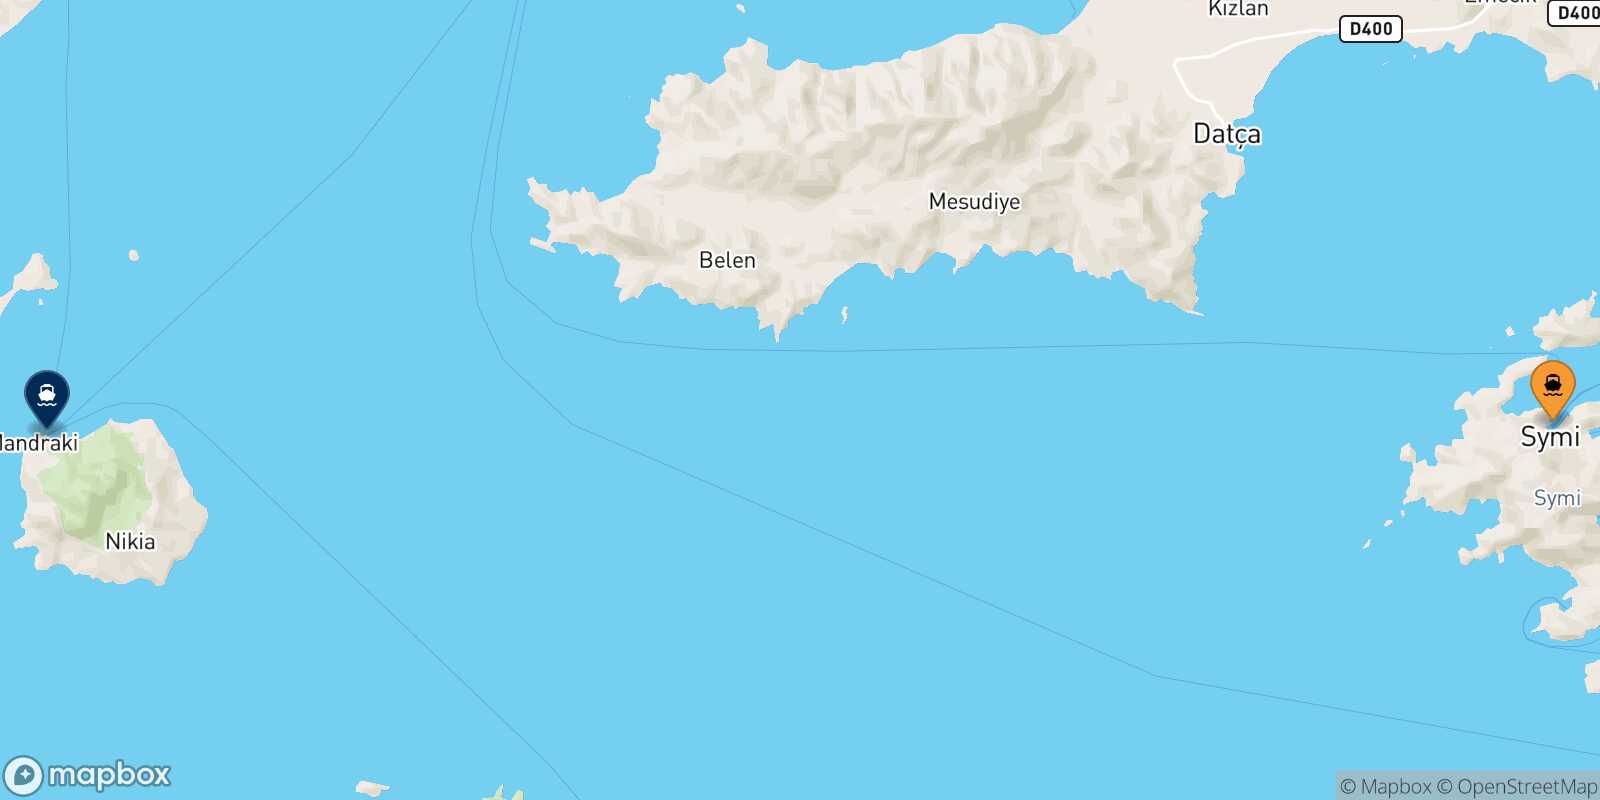 Symi Nisyros route map